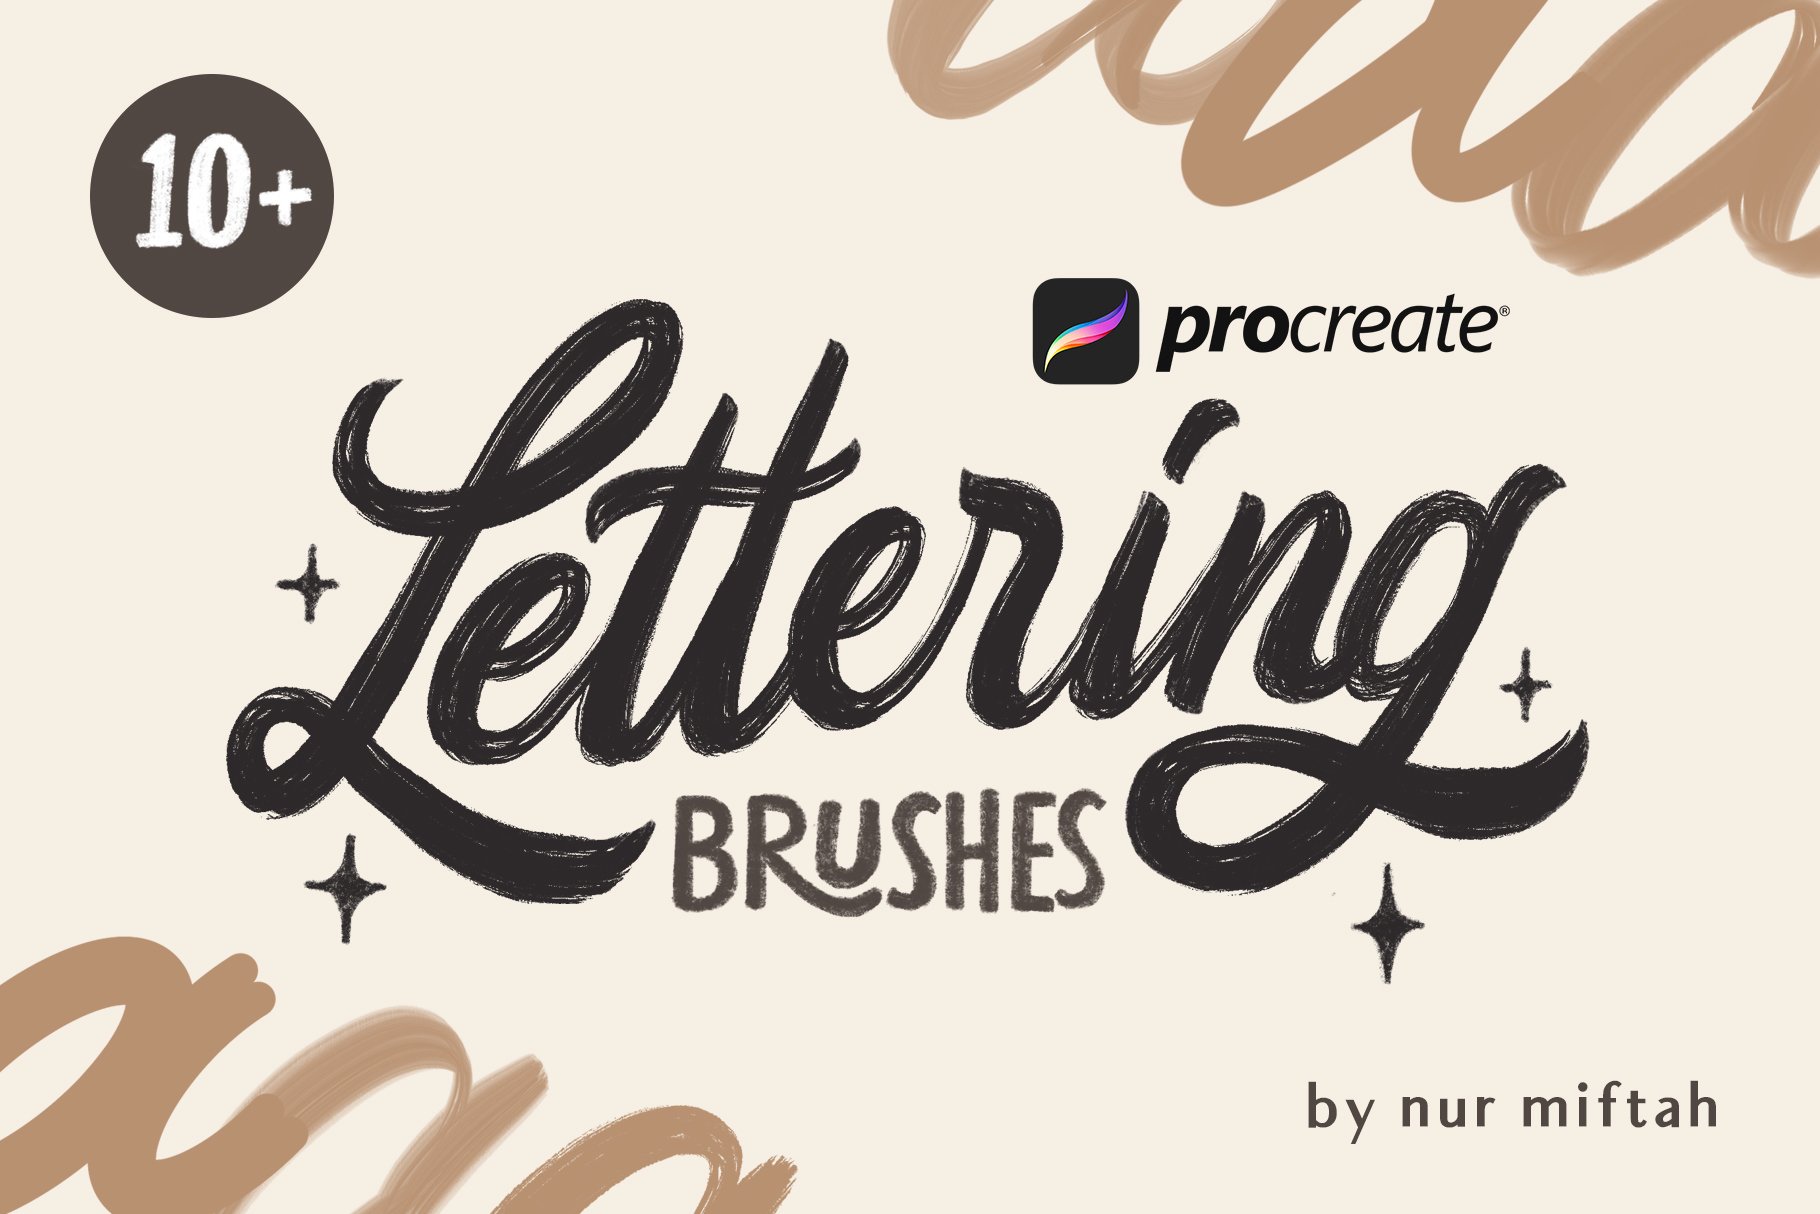 Procreate_Lettering_Brushes